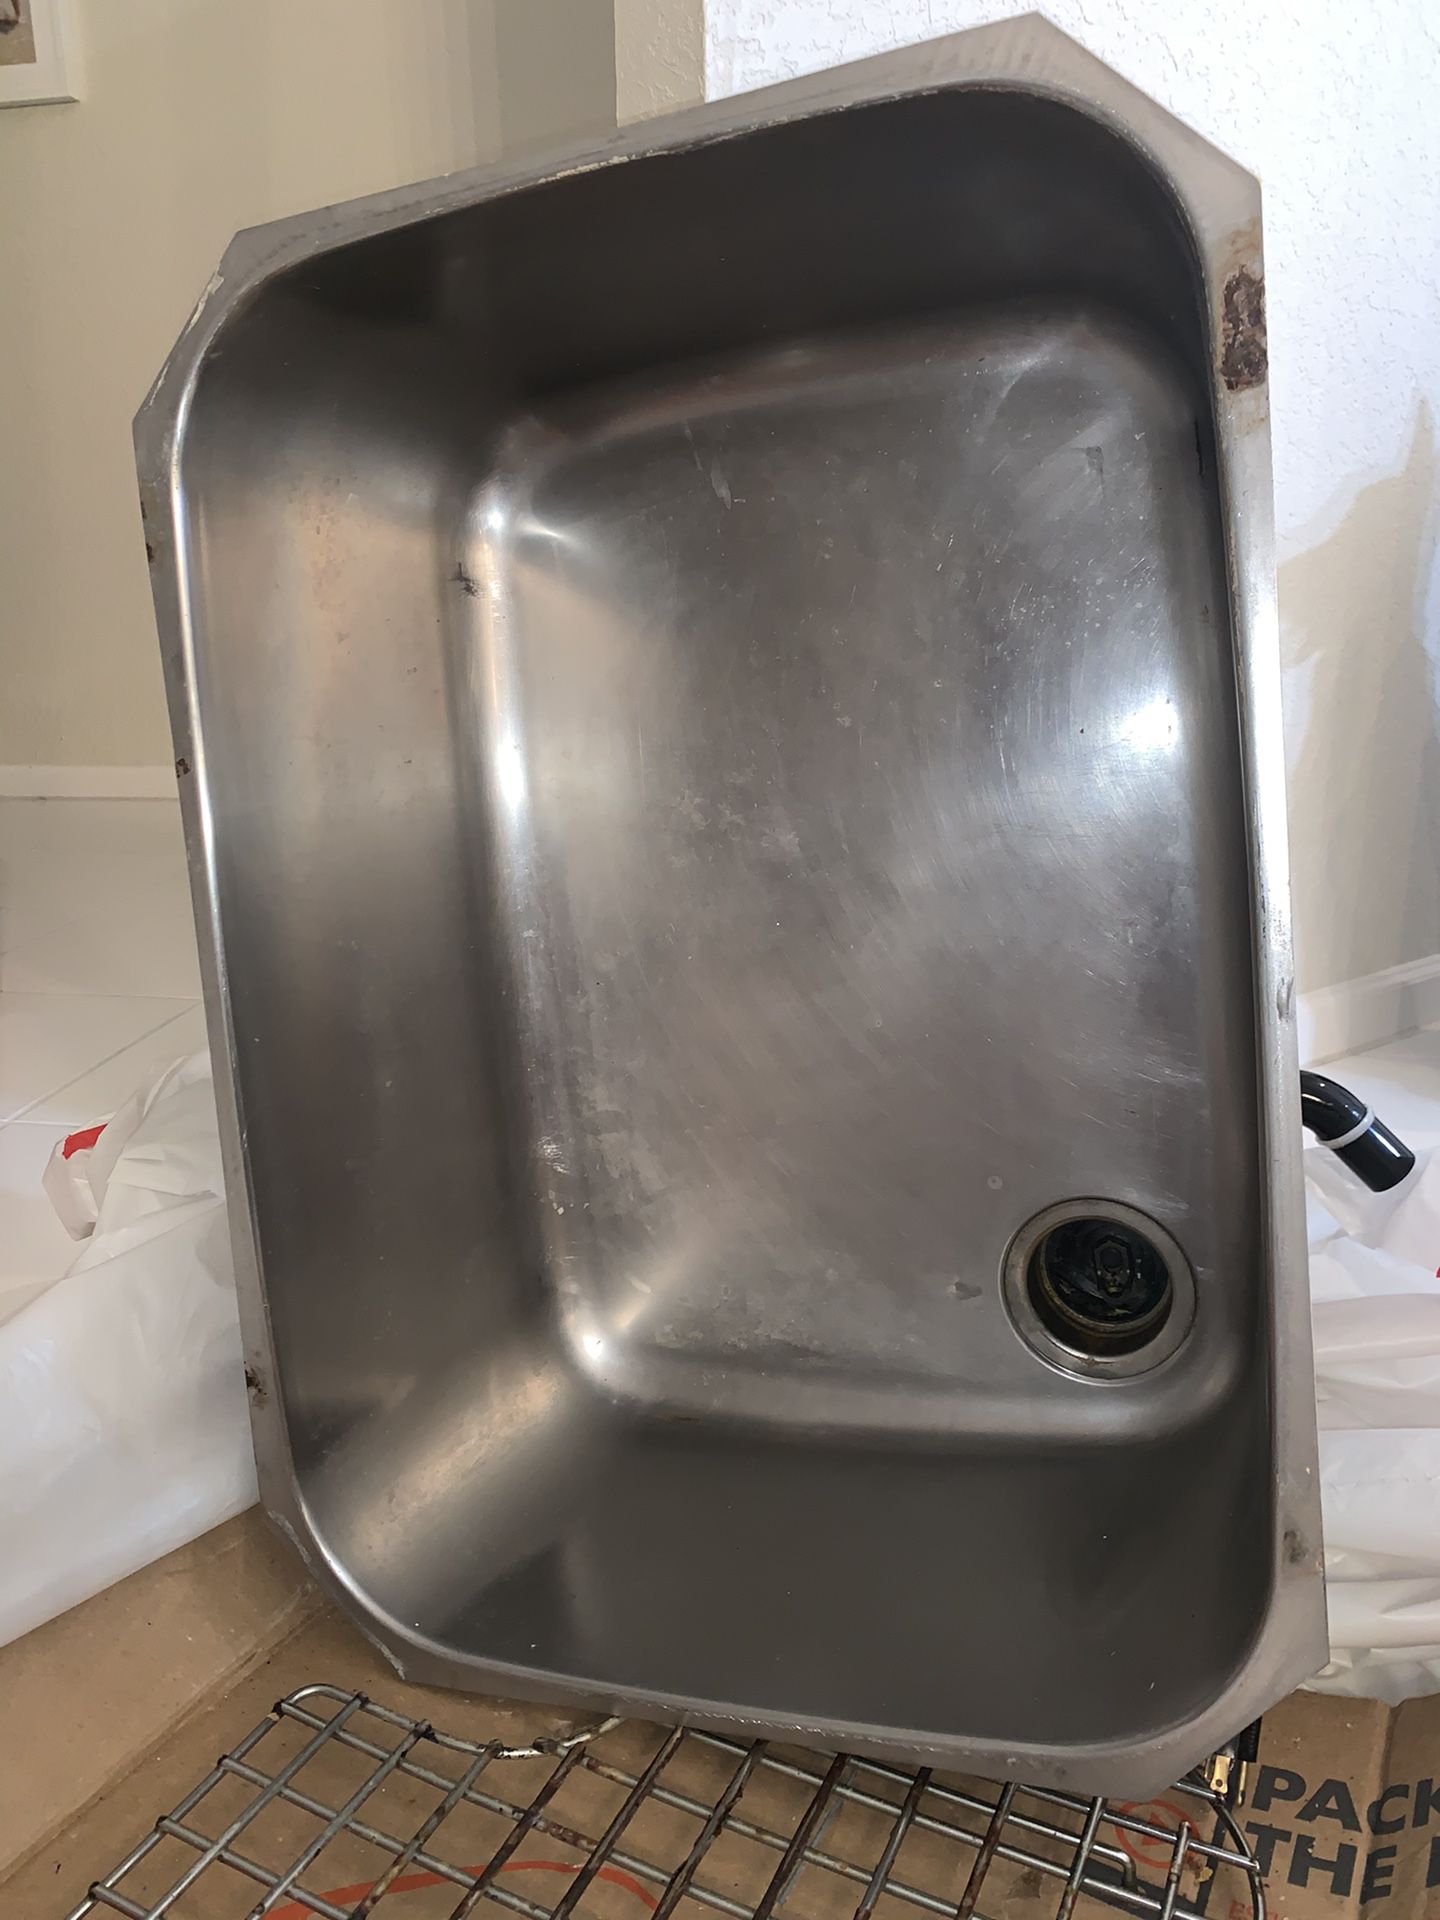 Stainless steel farmhouse kitchen sink